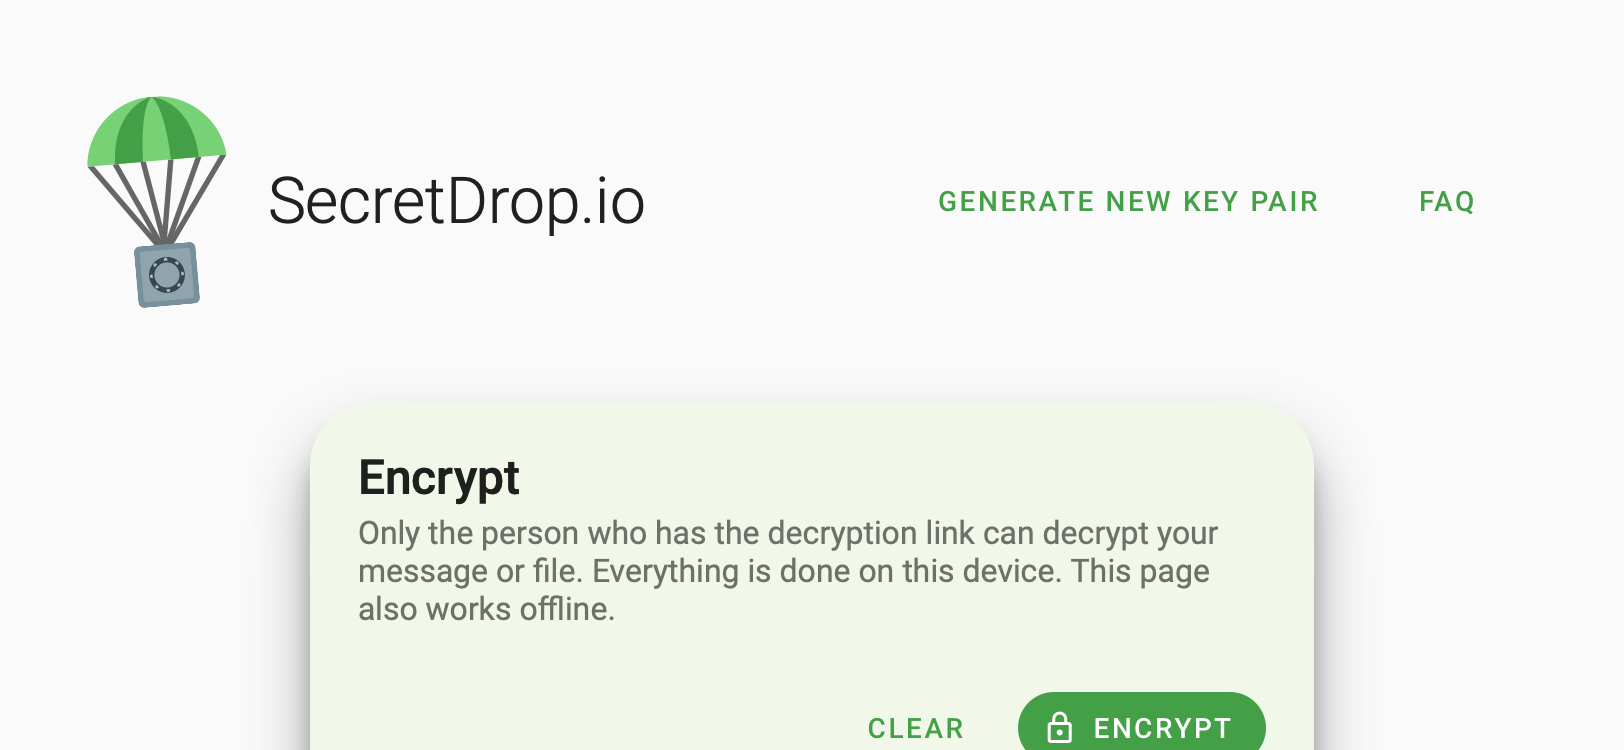 main-test-ts-encrypt-decrypt-encrypt-page-text-encryption-screenshot-812-375-0-snap.png